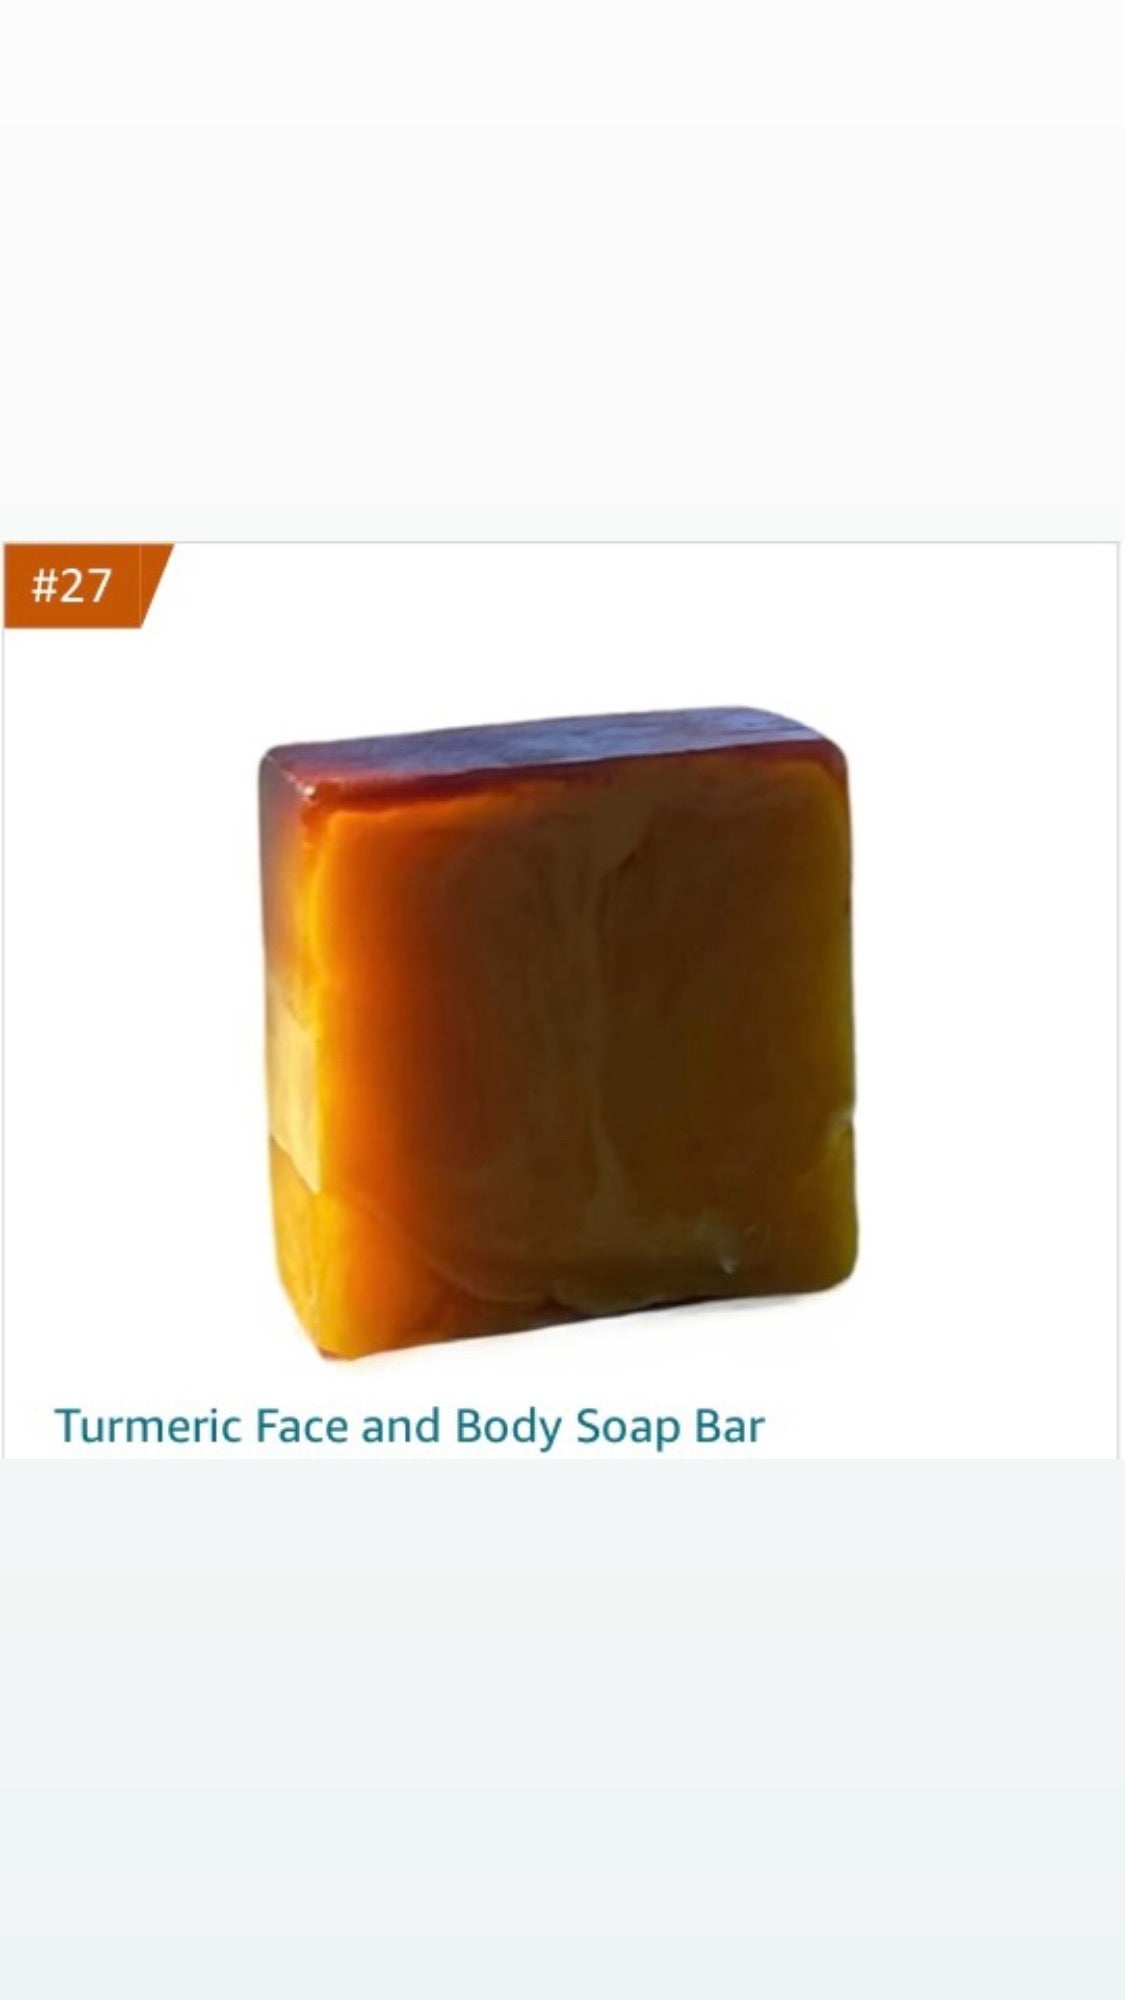 Turmeric Face and Body Soap Bar